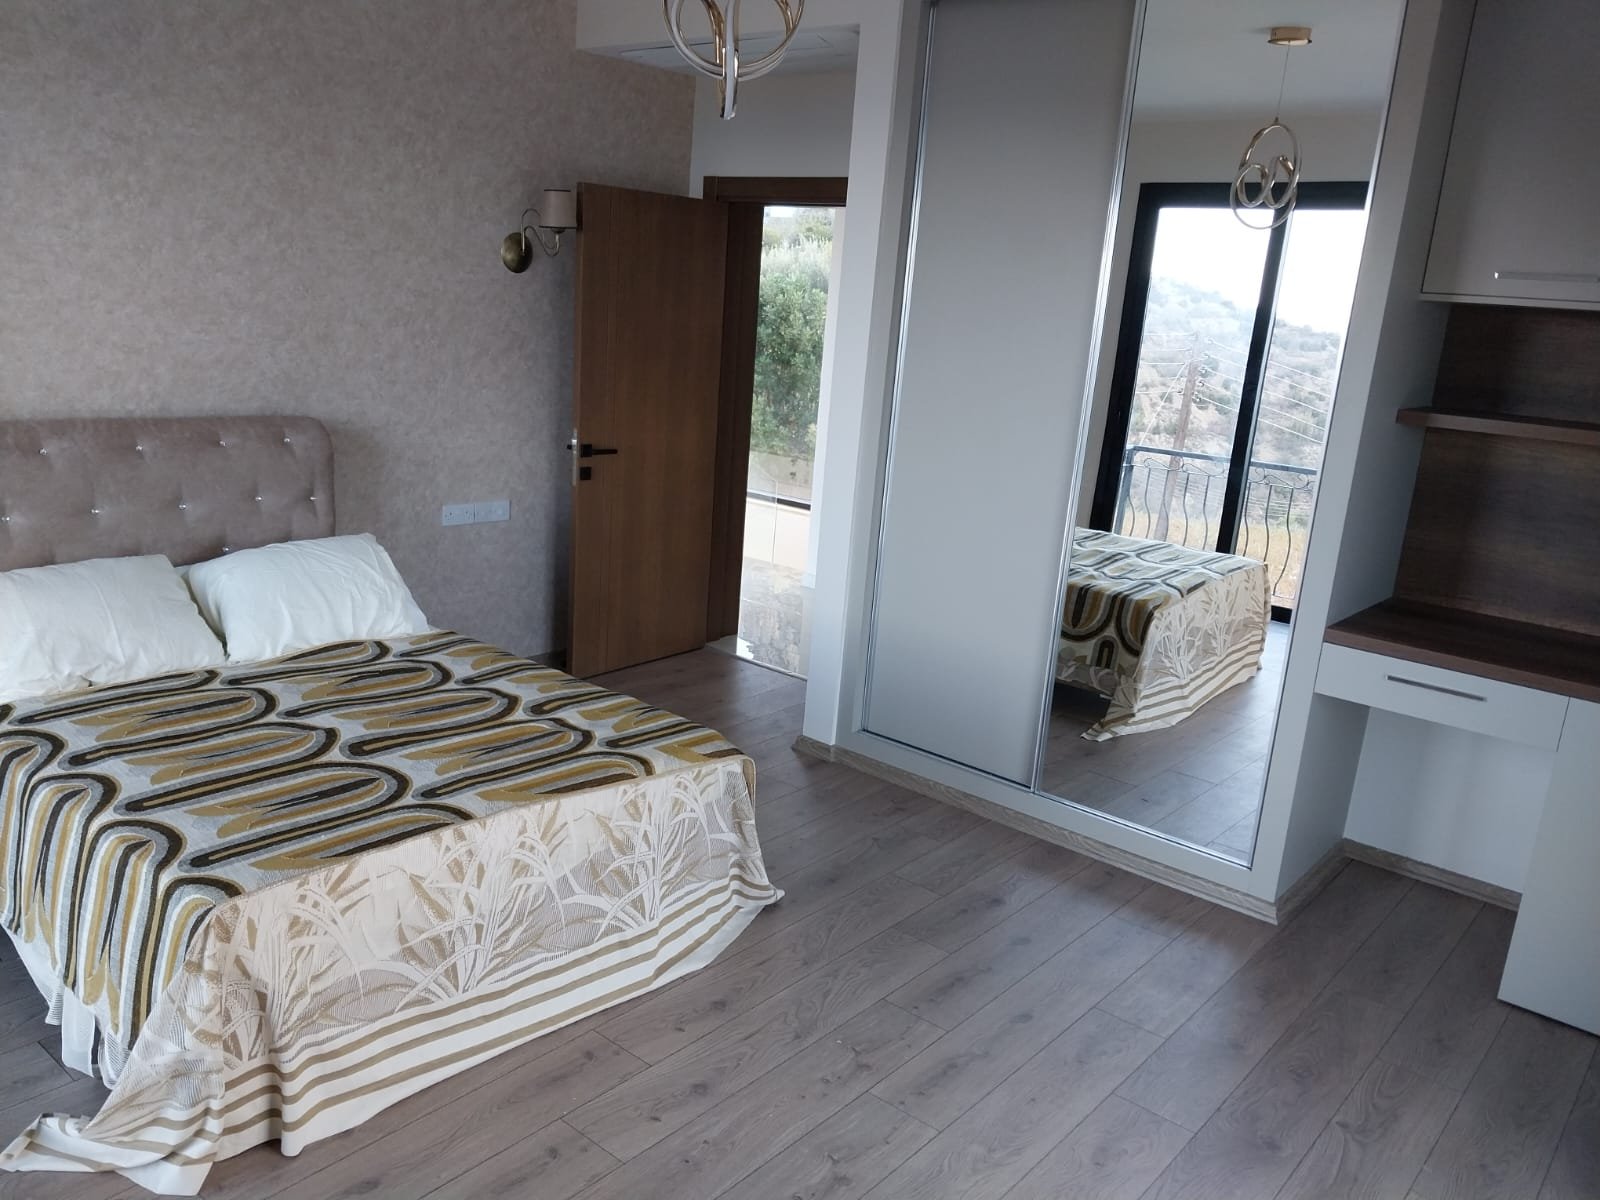 Luxury 4 Bedroom Villa in Ilgaz-e584daad-02f5-4d5b-ace9-96fcd3a44858